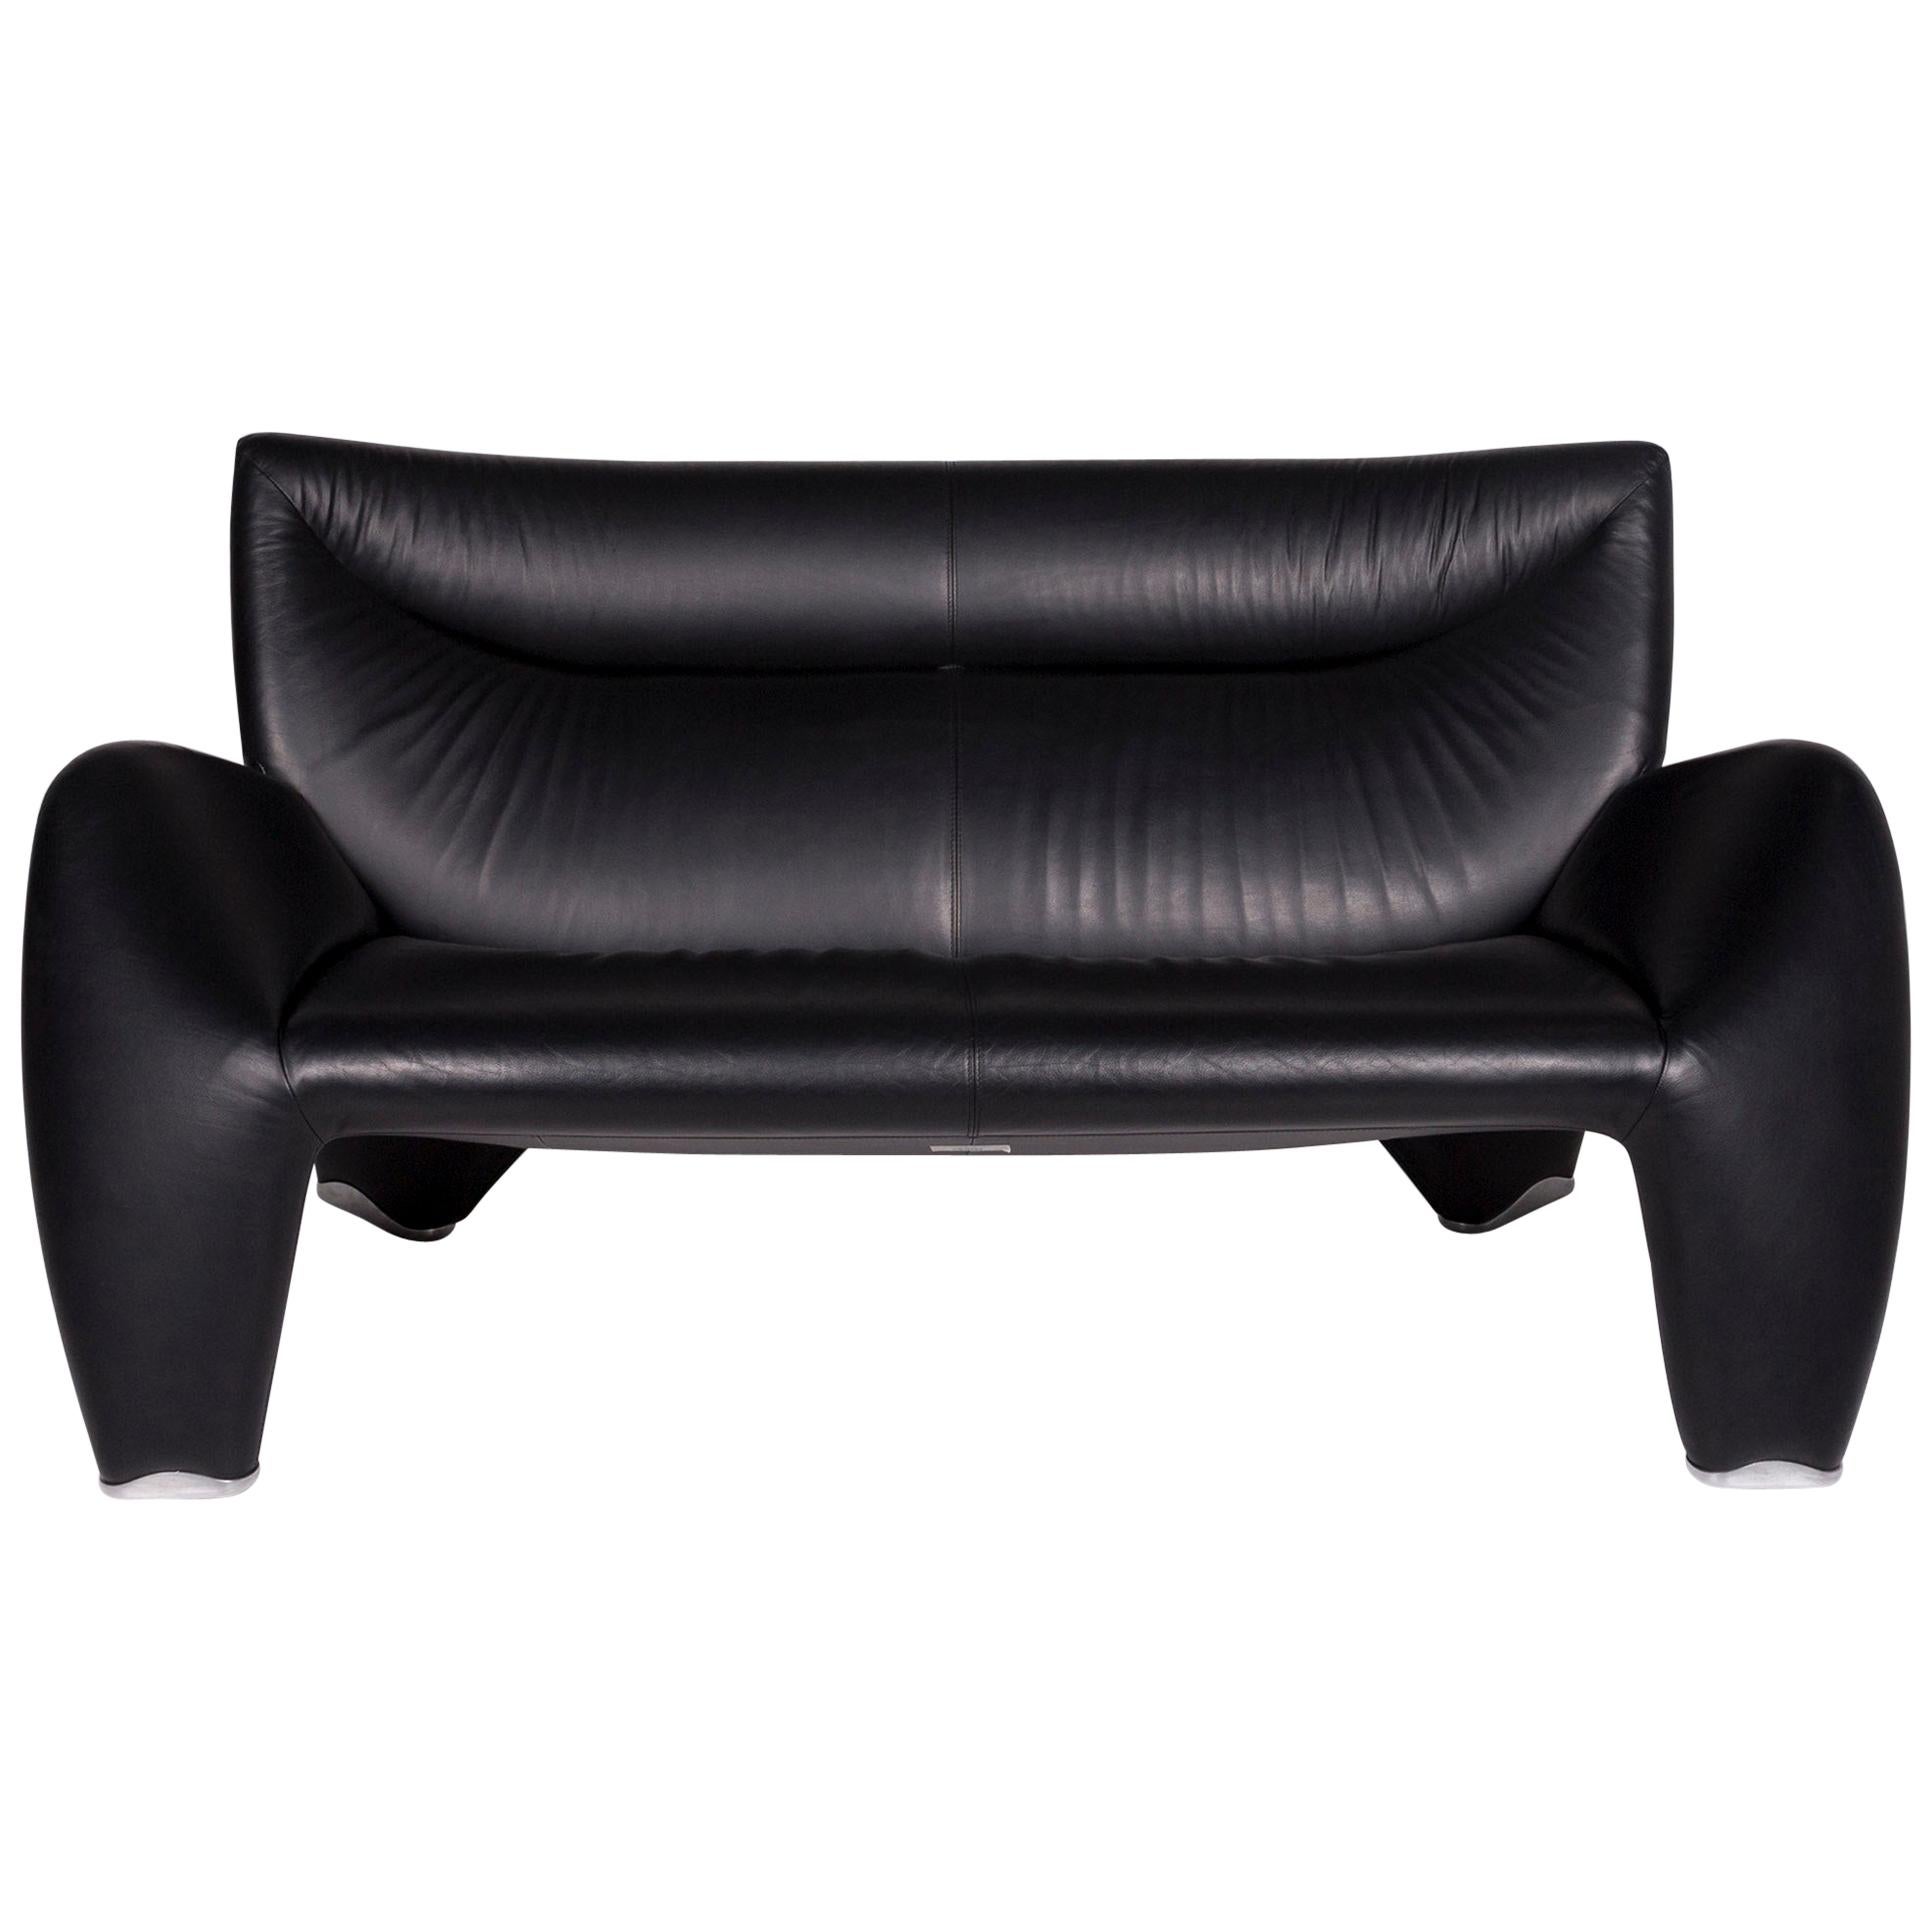 Leolux Akhenaten Leather Sofa Black Two-Seat Couch